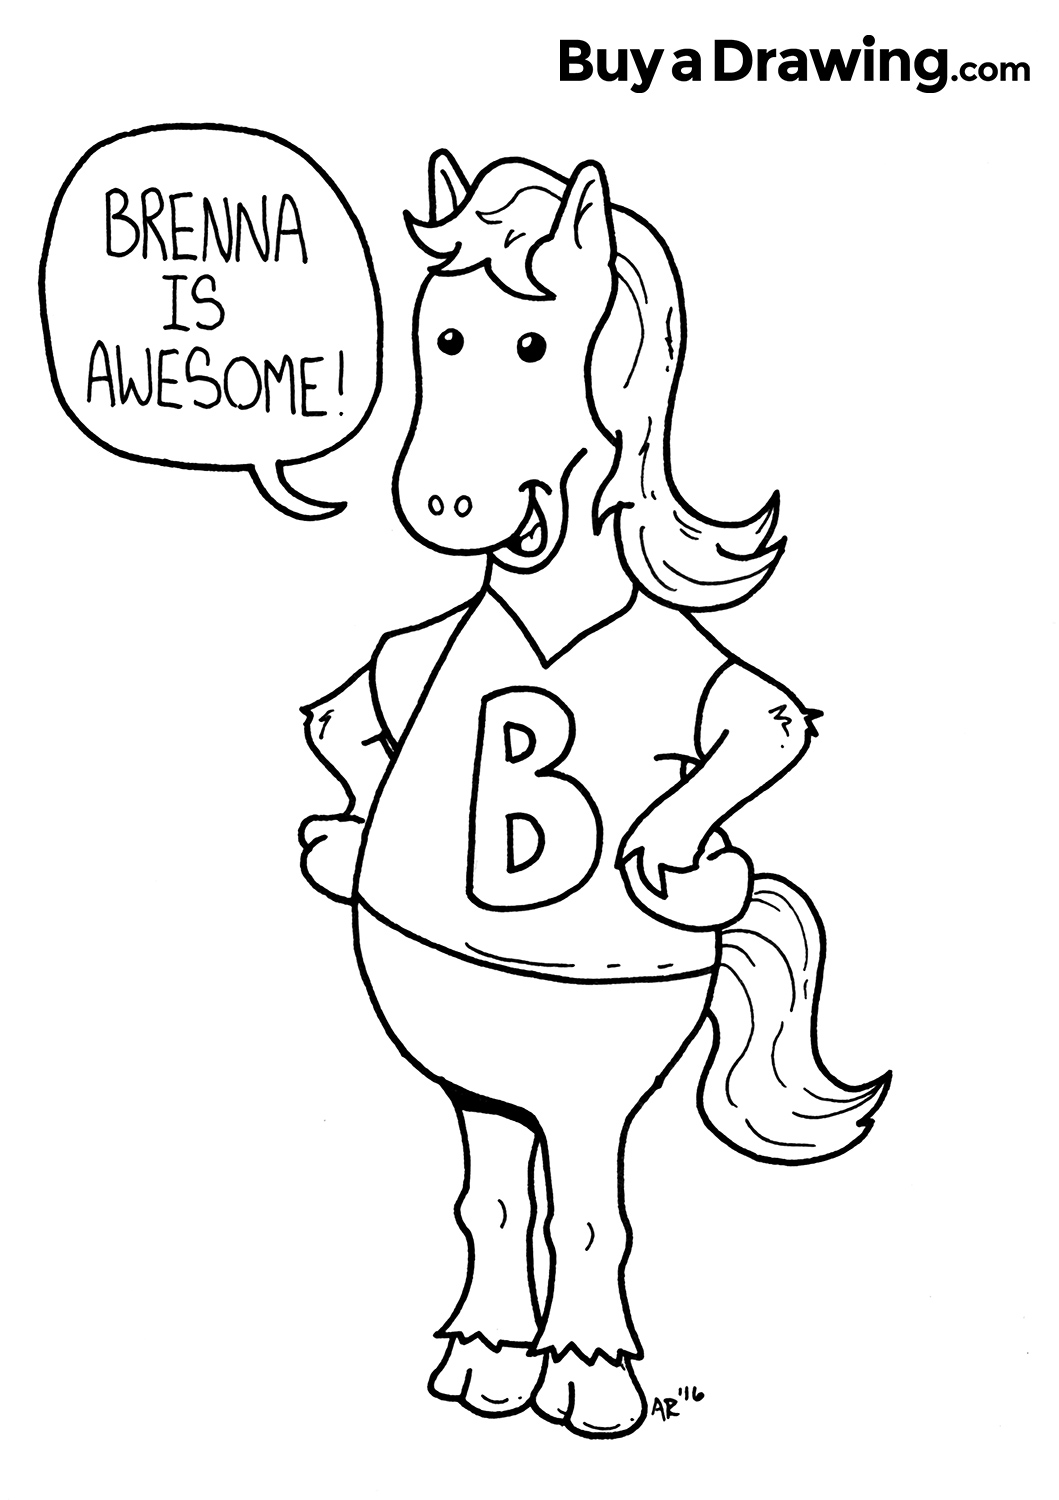 A Simple Cartoon Horse for Brenna